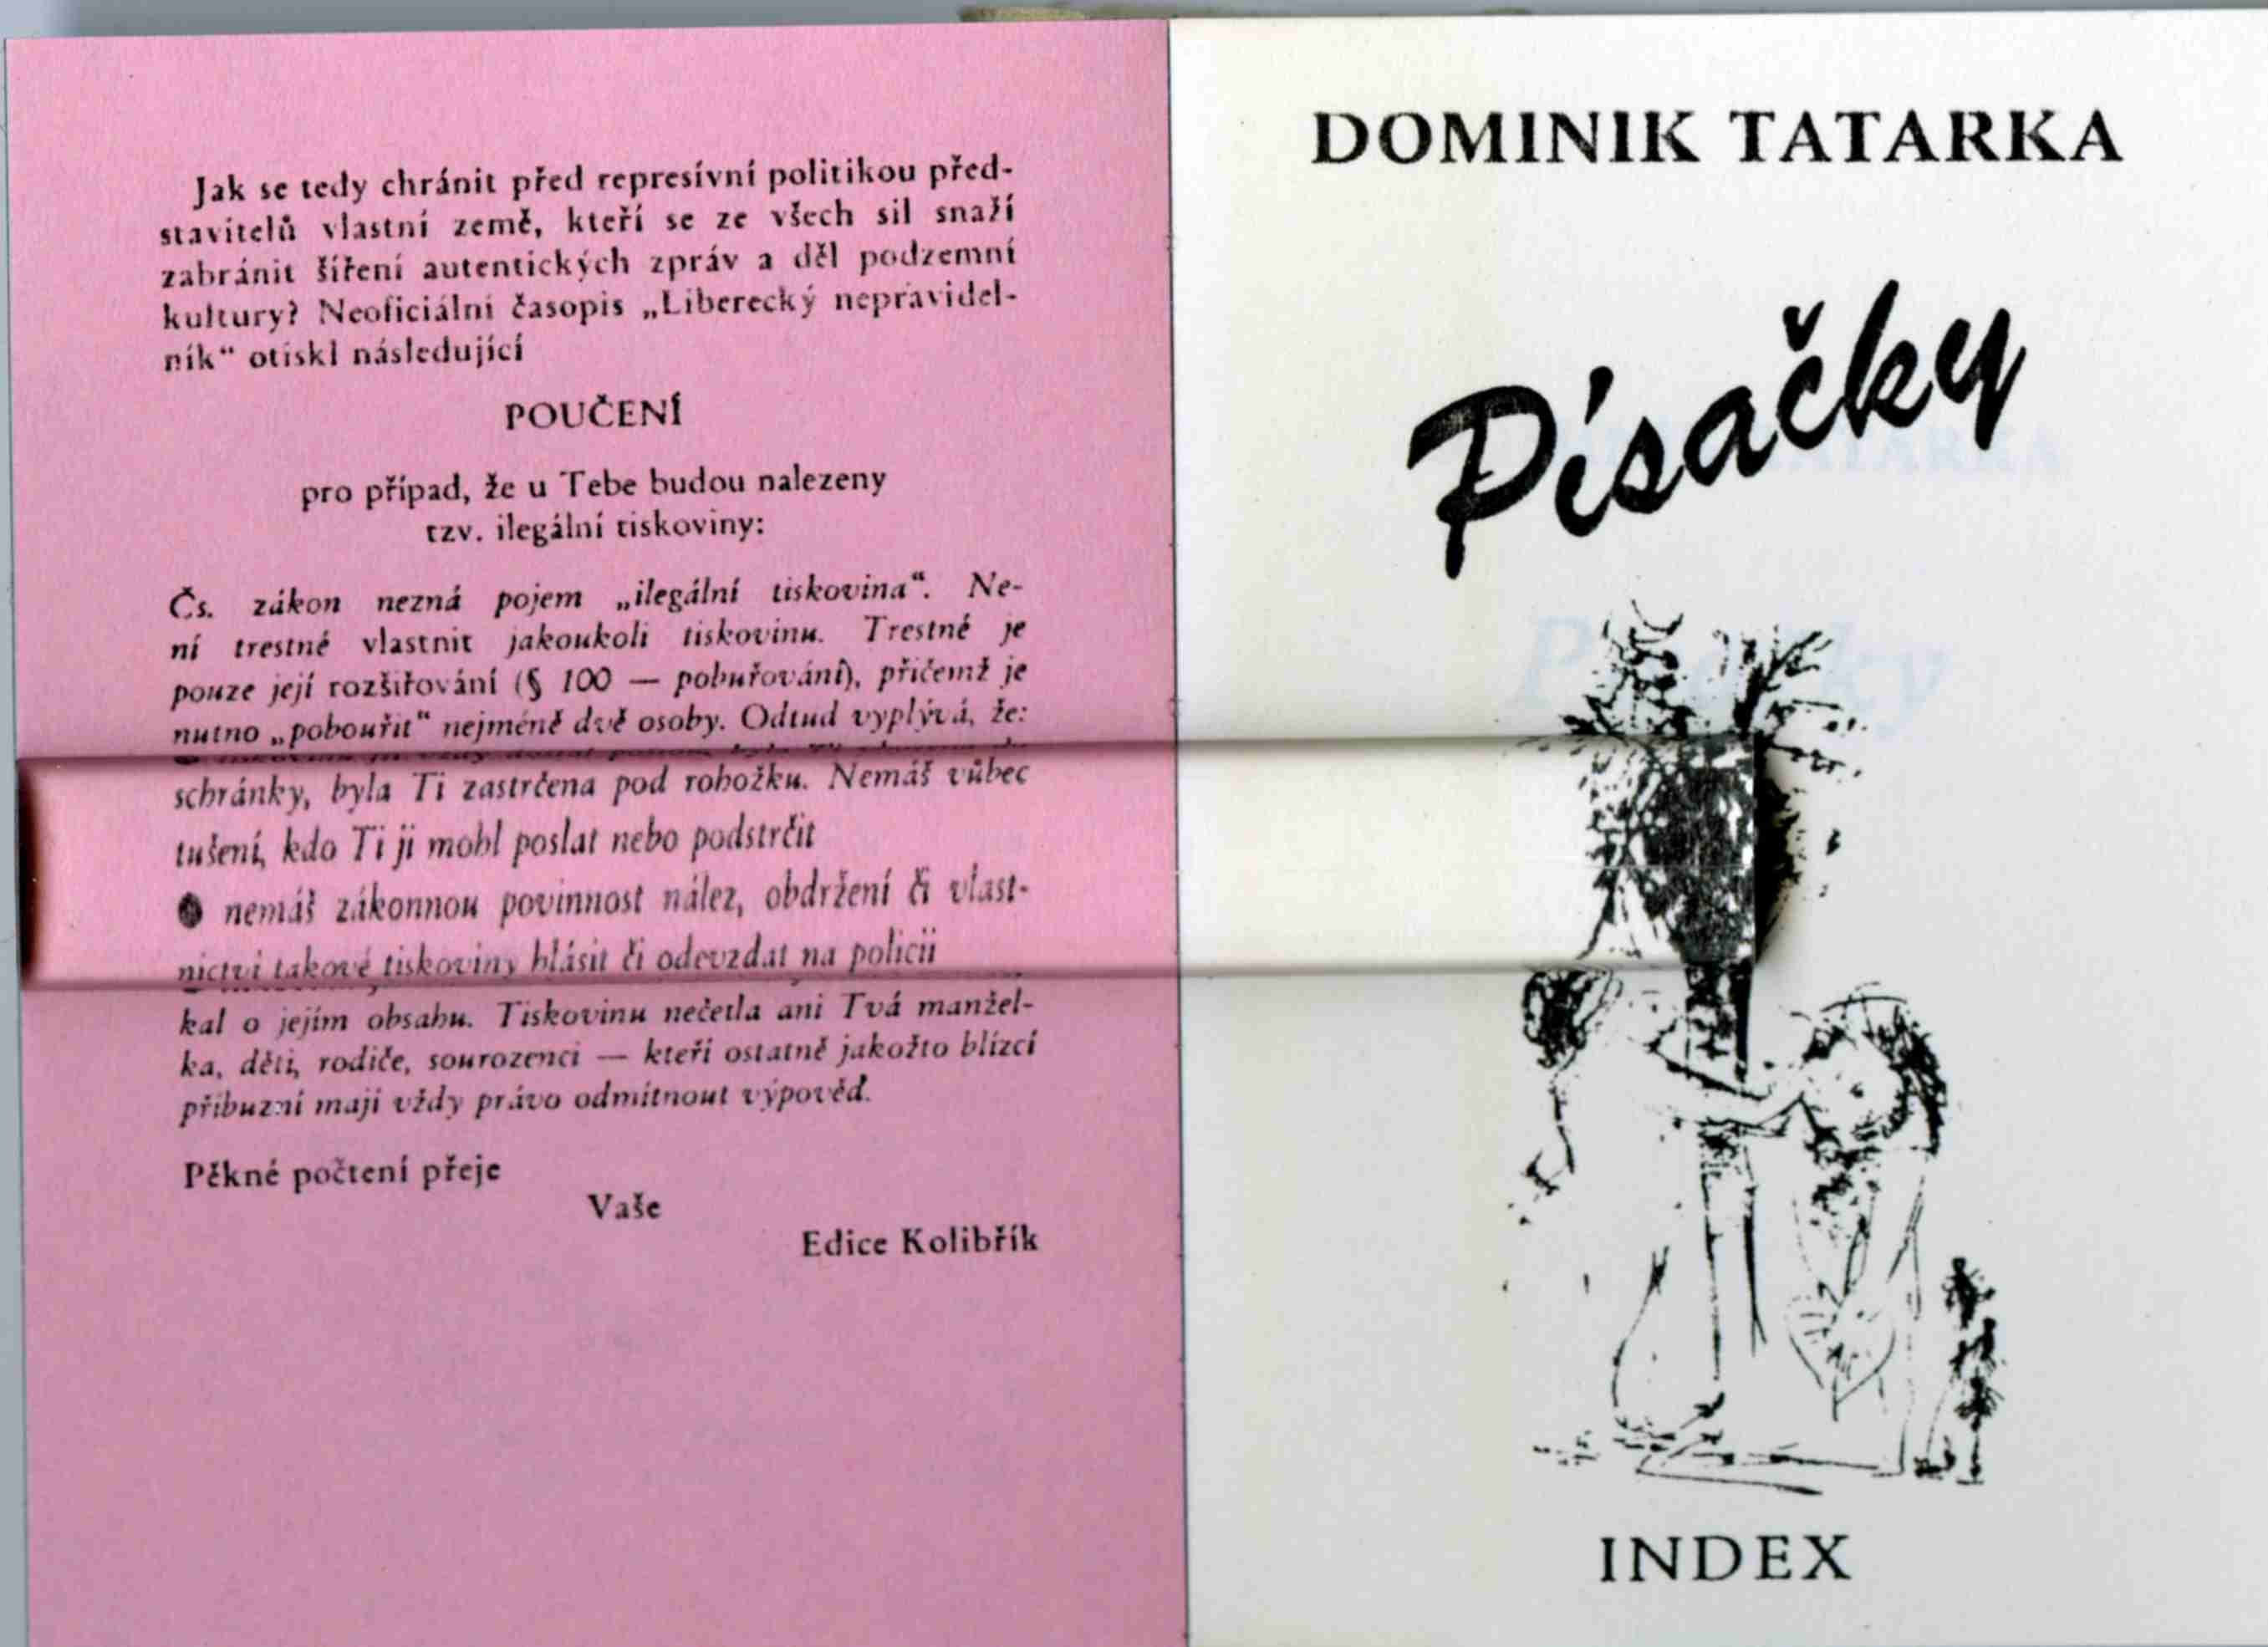 Illustration of An example of a “hummingbird” book: a novel Pisáčky by the Slovak dissident author Dominik Tatarka